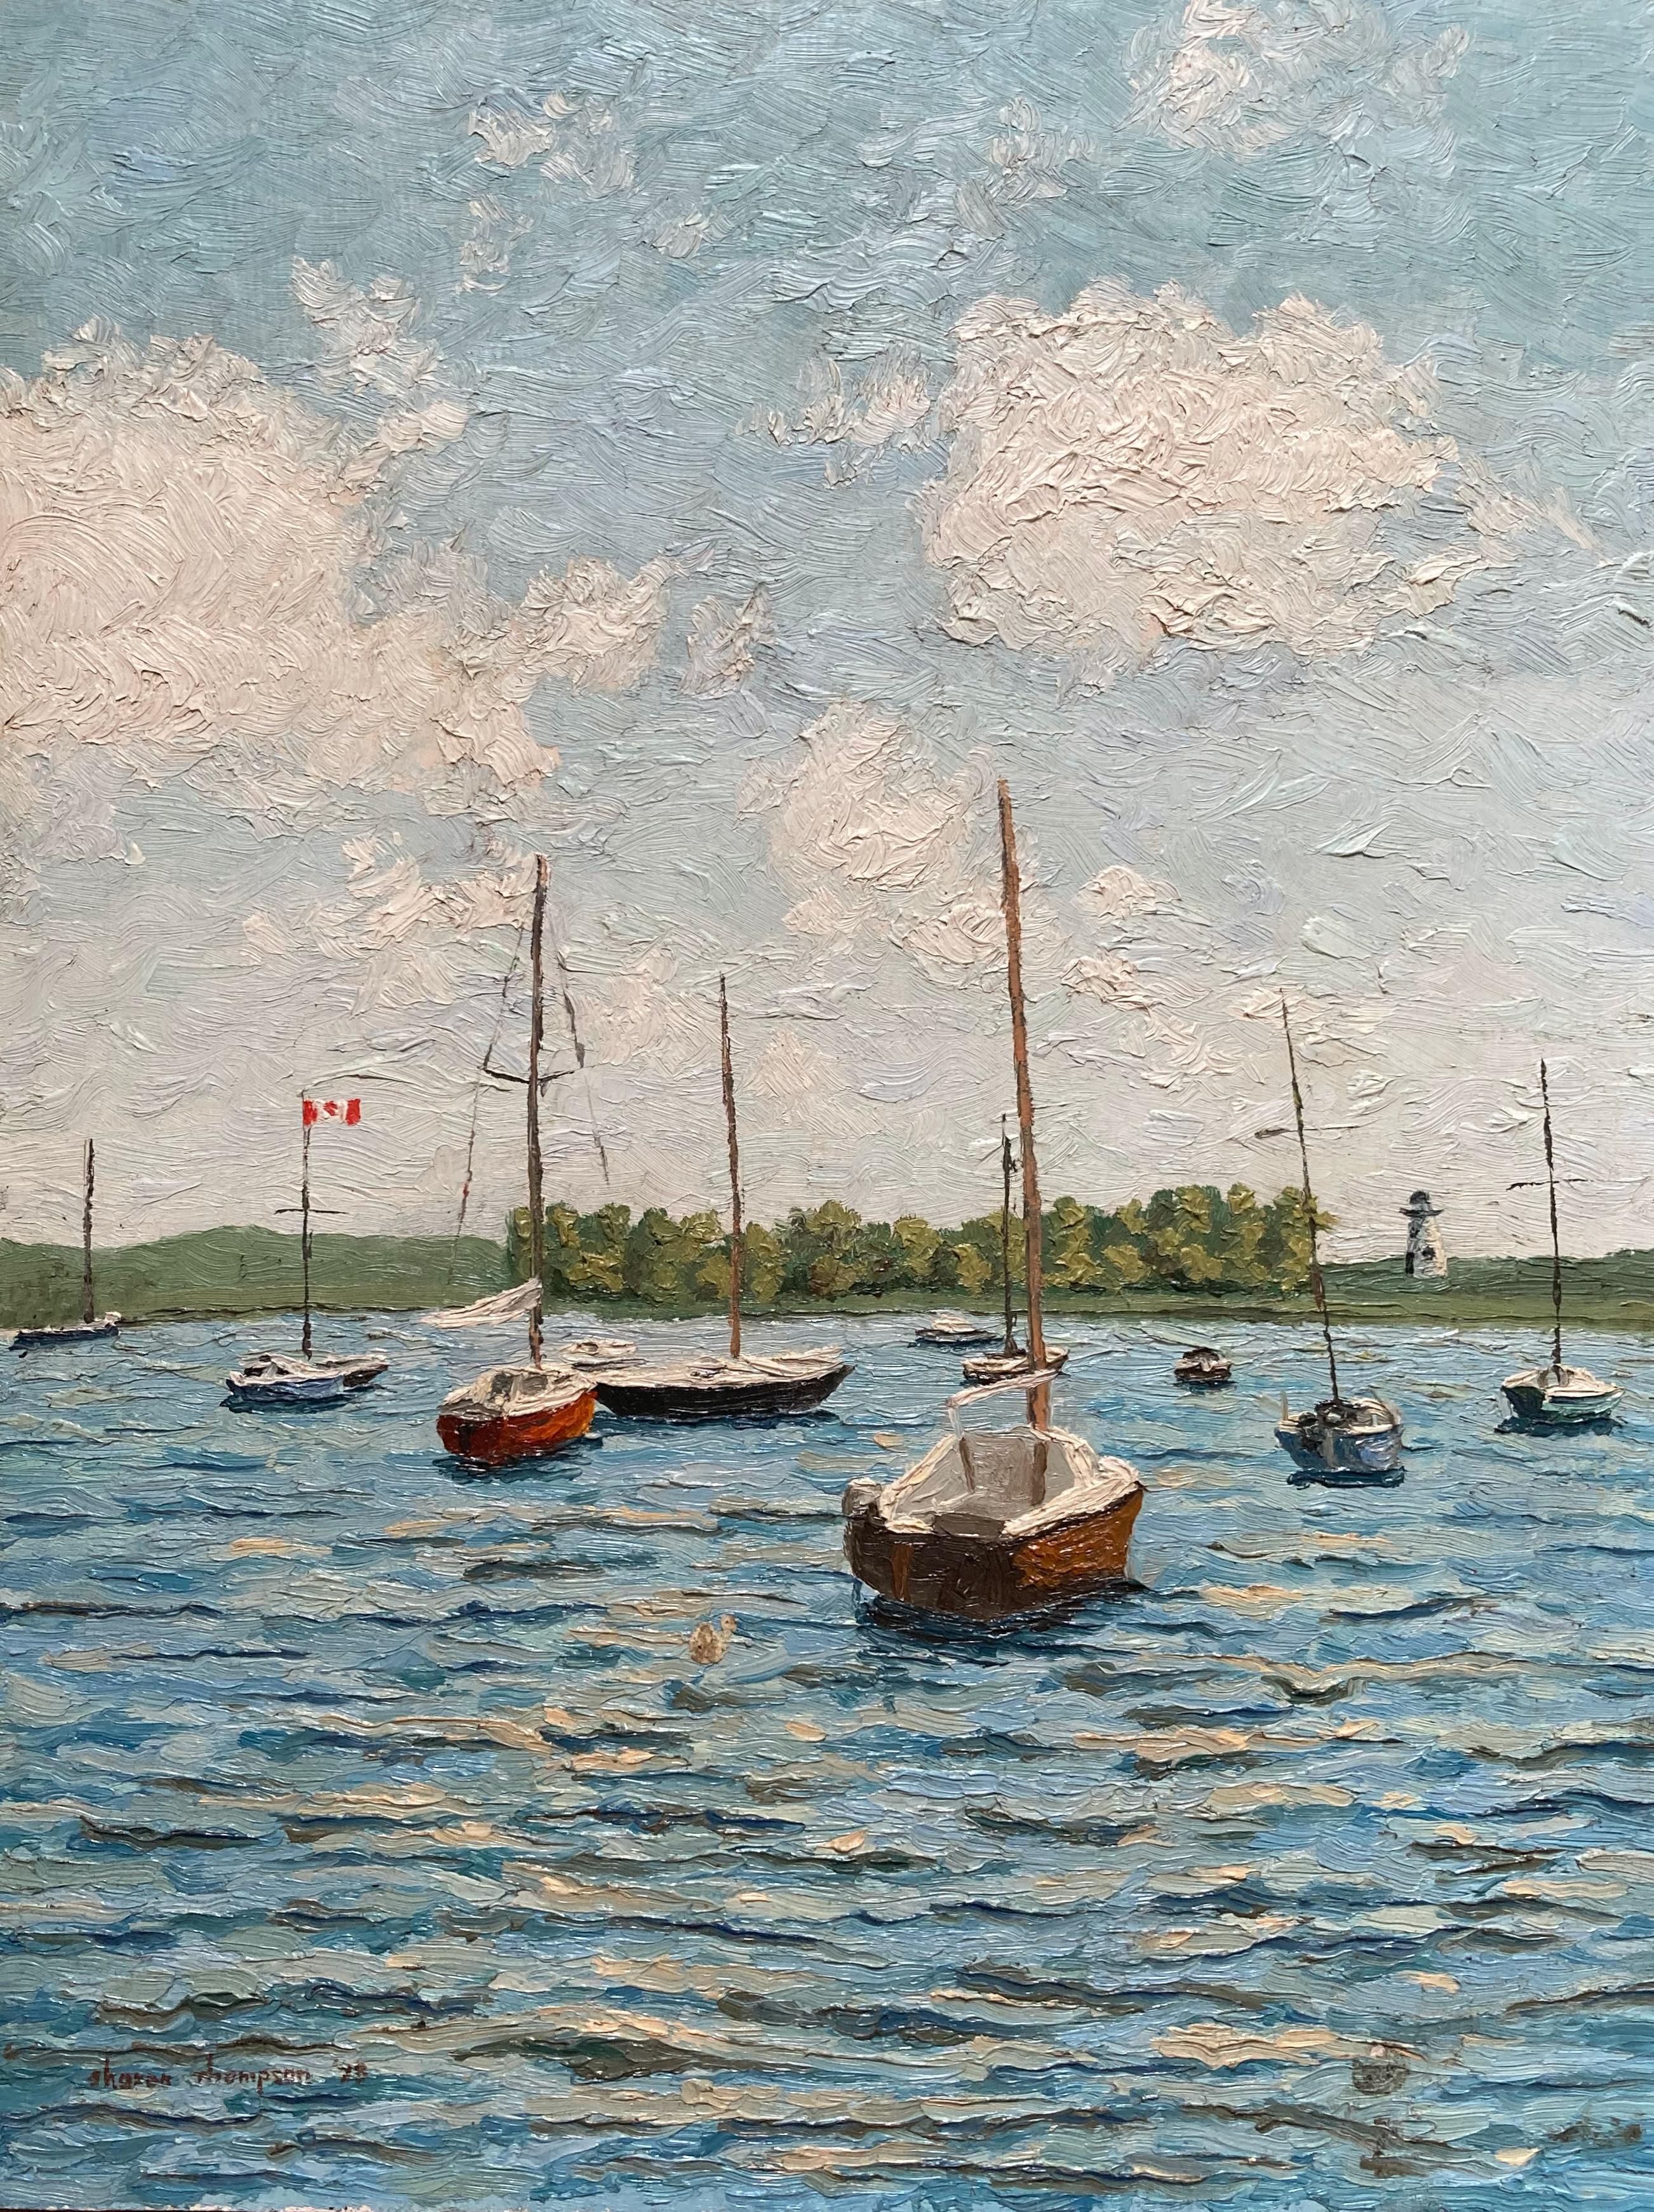 Sharon Thompson Landscape Painting - Sailboats at Anchor